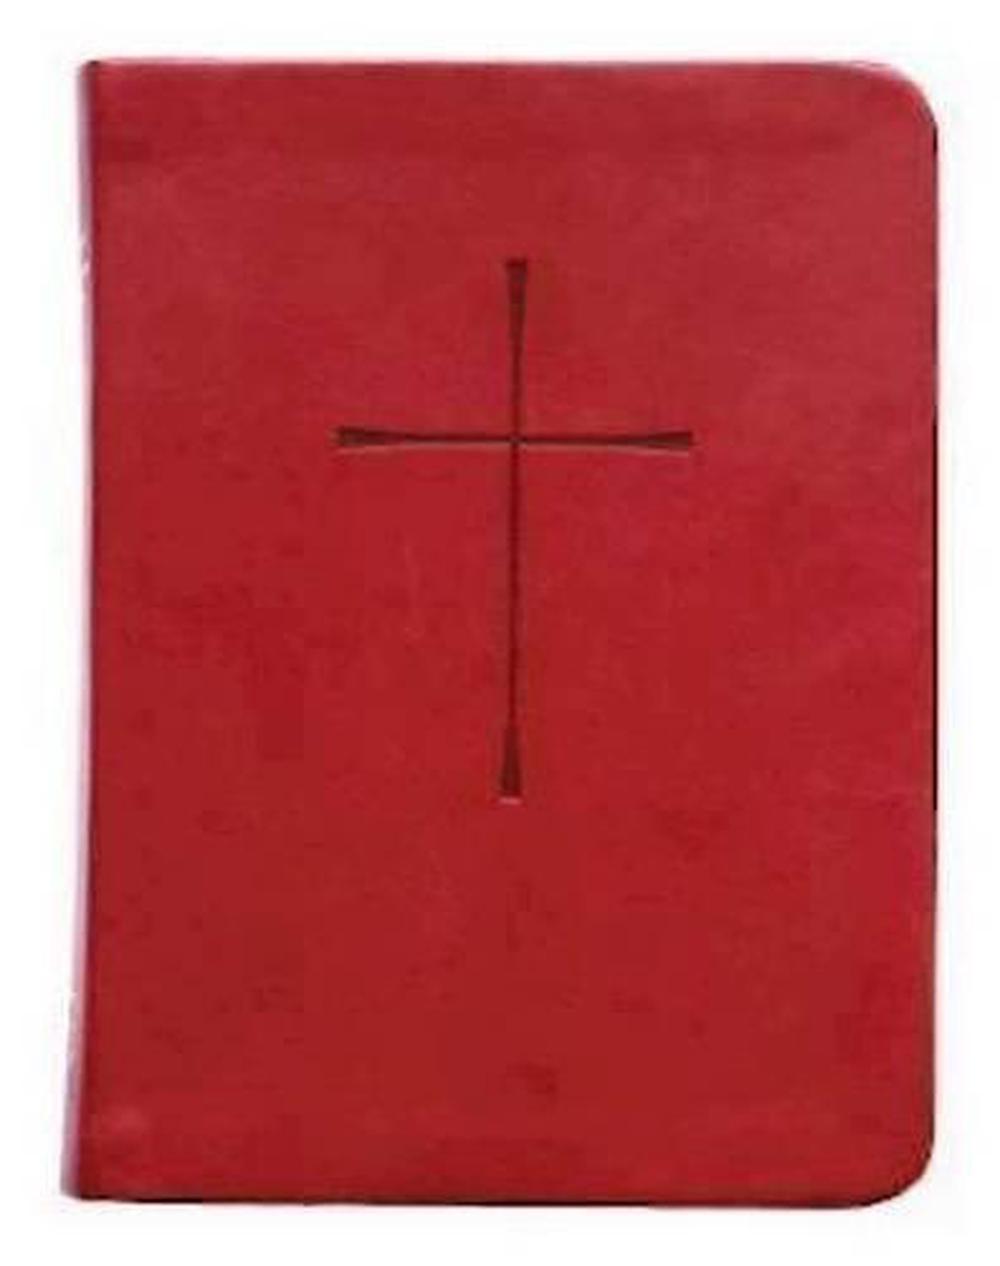 red book of prayers pdf